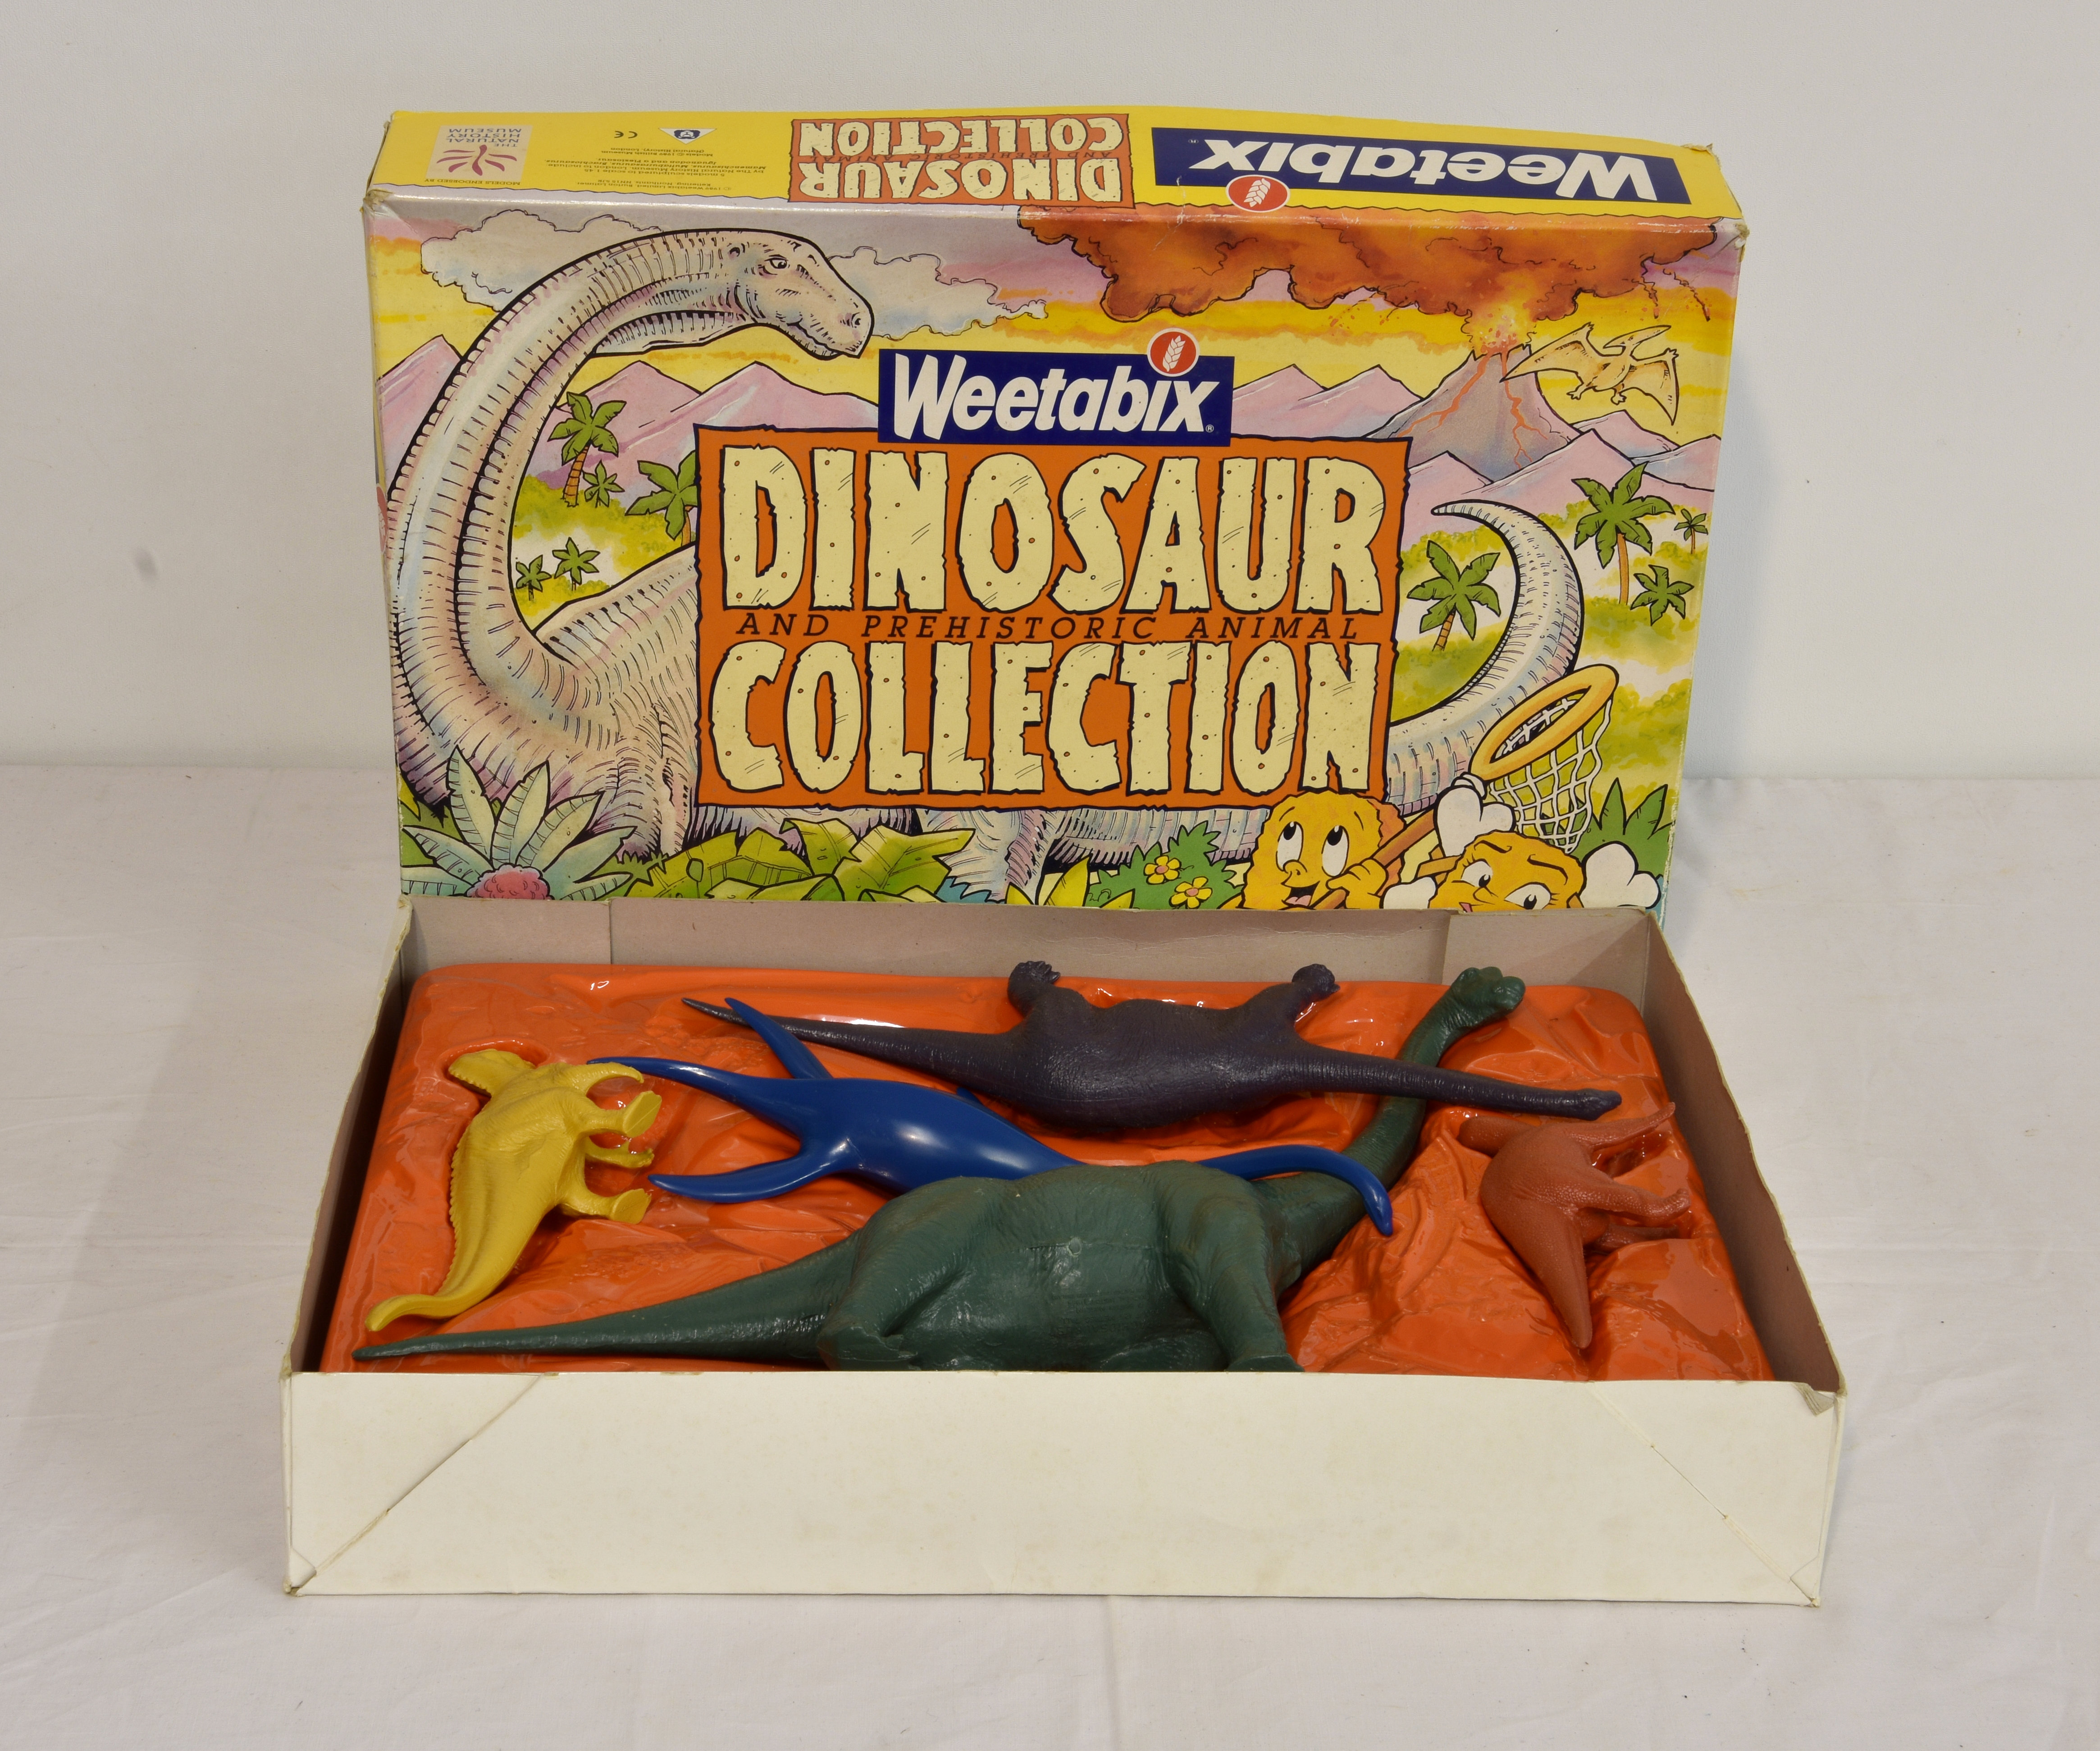 Weetabix Dinosaur and Prehistoric Animal collection, 1989, in original box.